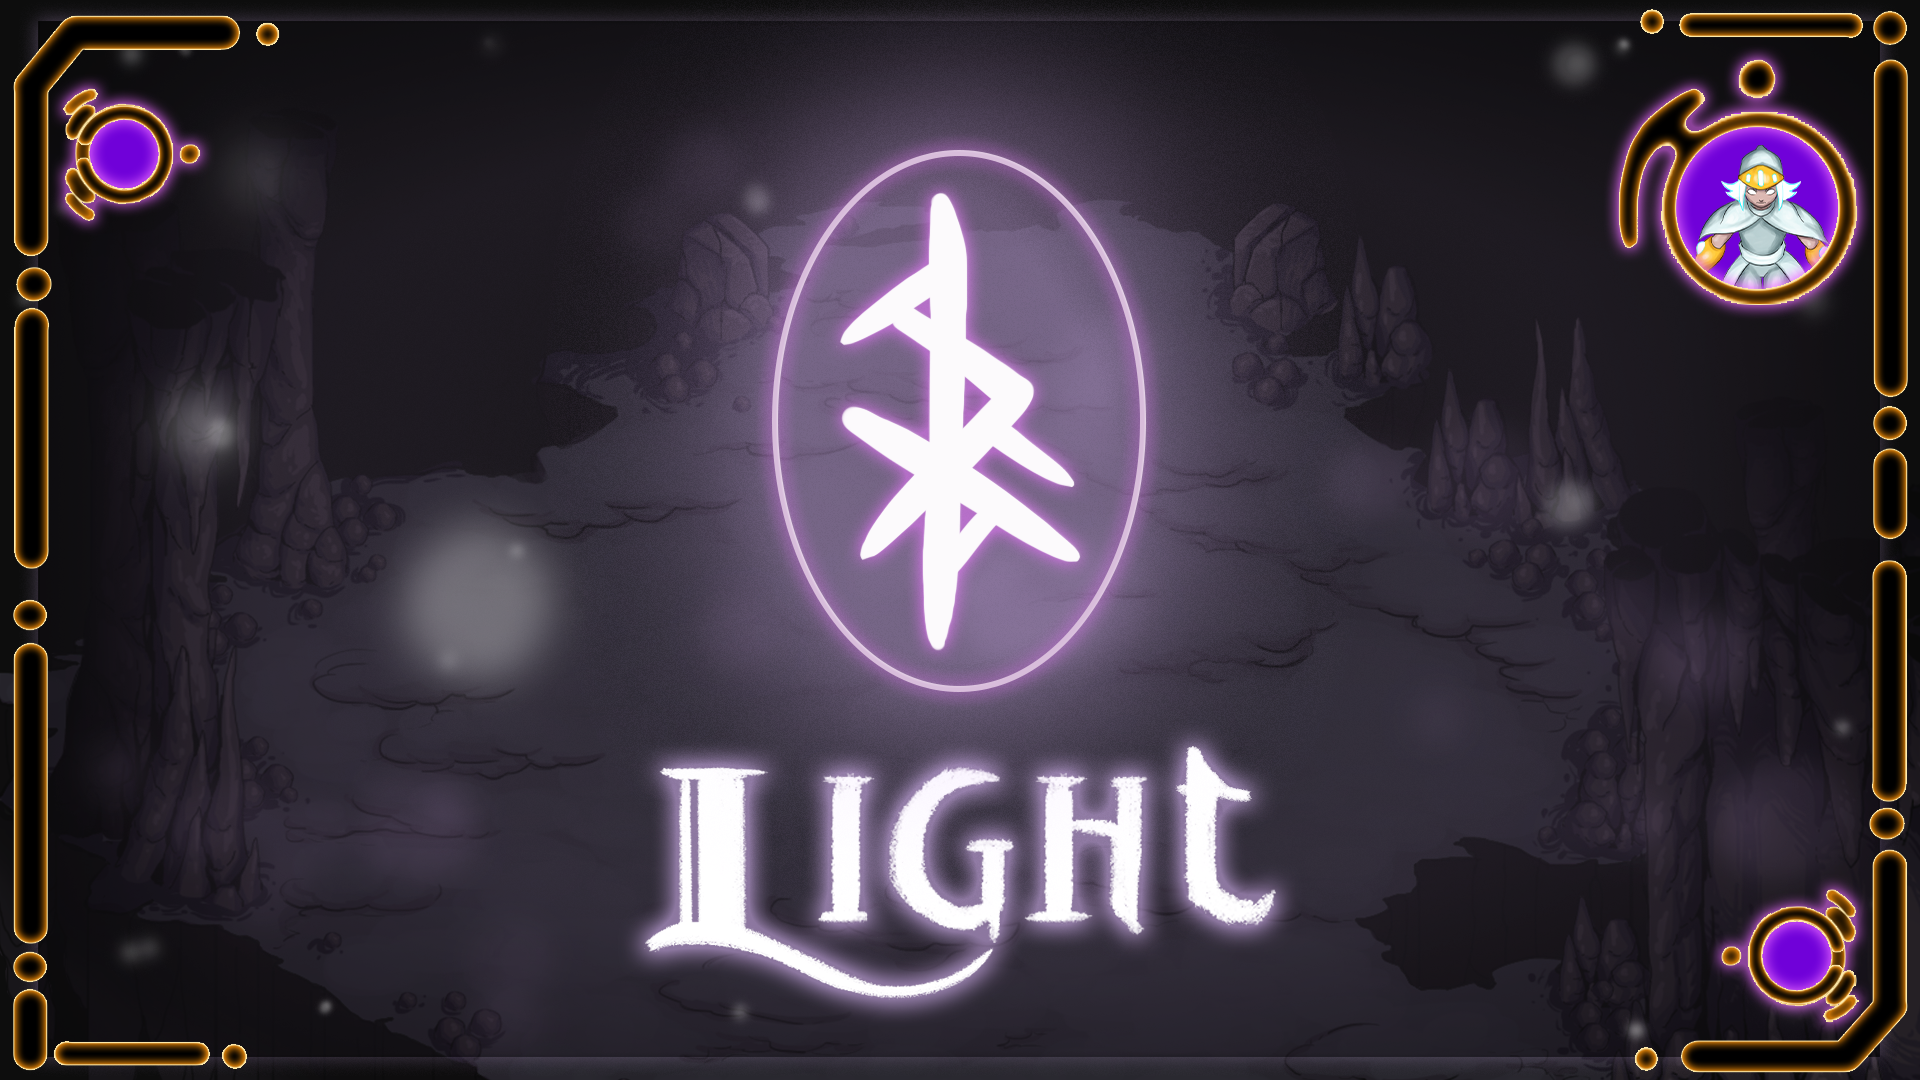 Project LIGHT